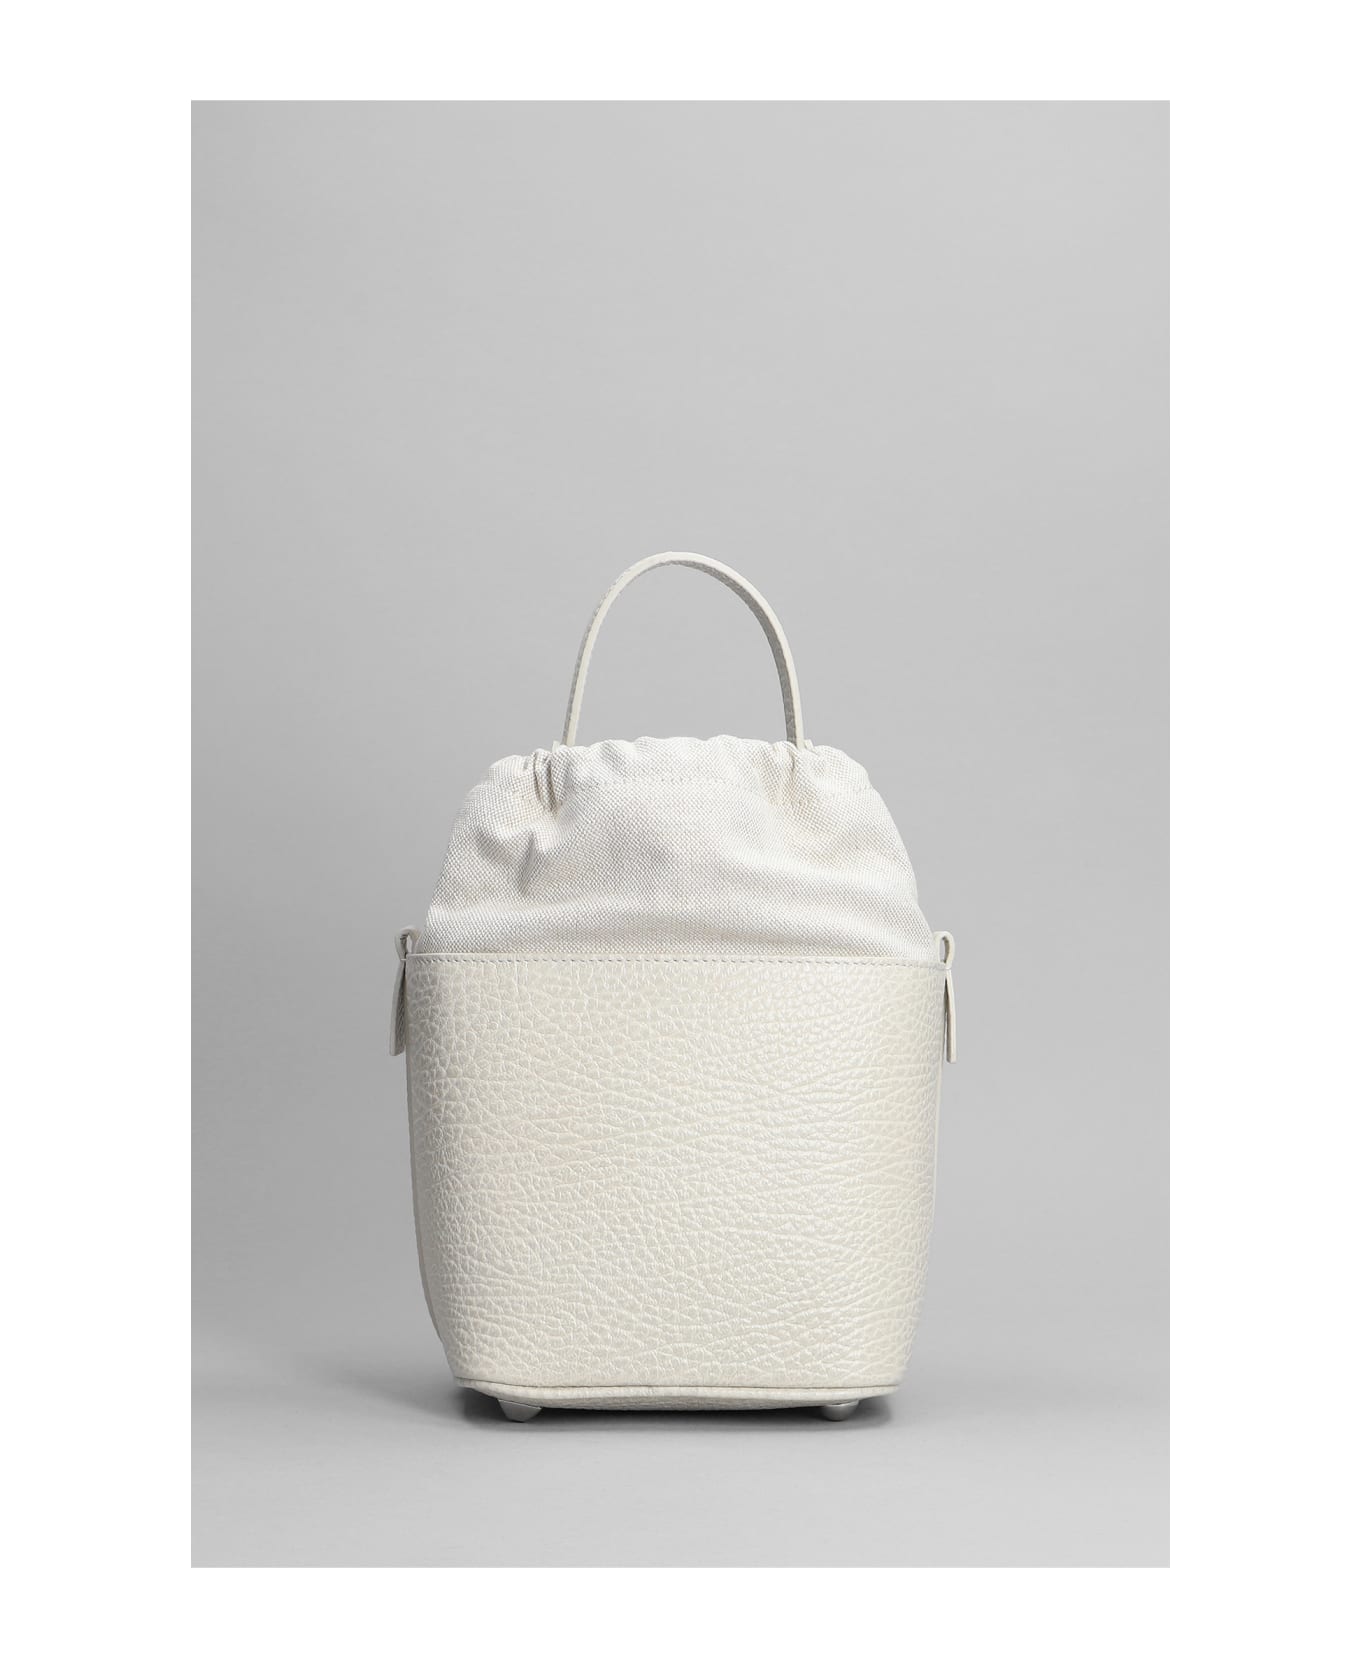 Maison Margiela Hand Bag In White Leather - WHITE